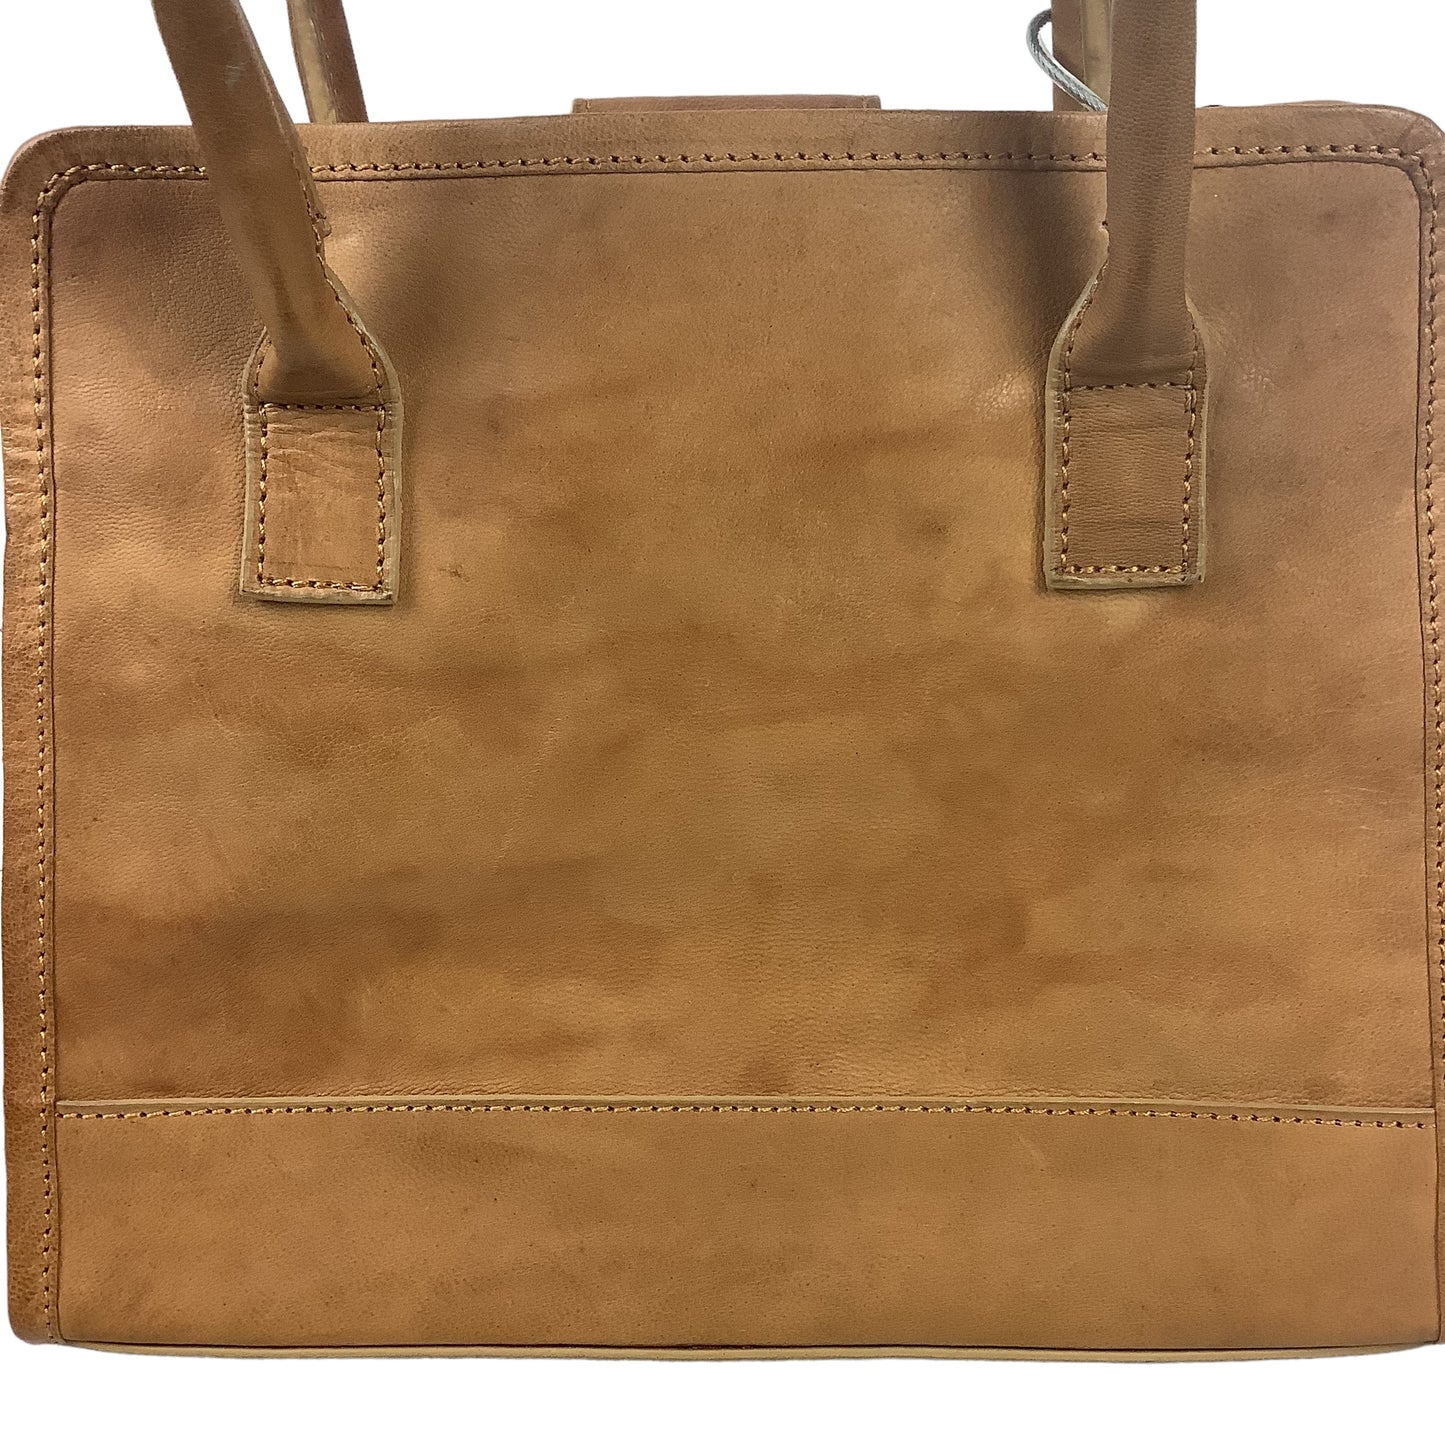 Handbag Designer By Cmc  Size: Medium